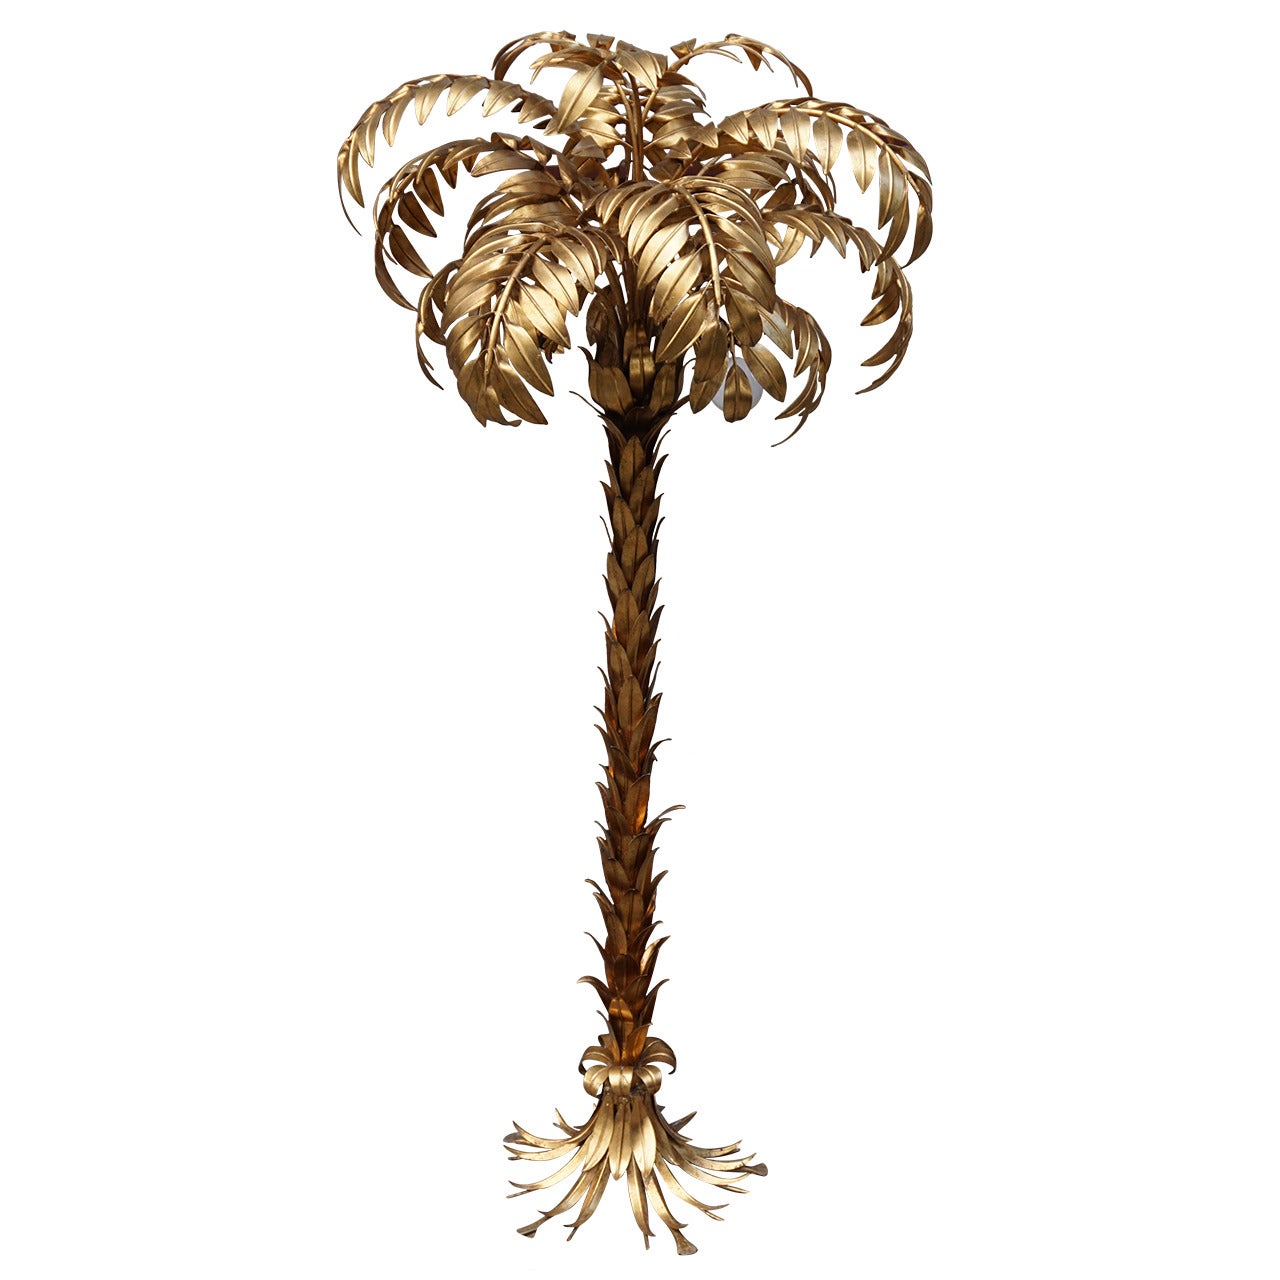 Gilt Metal Palm Tree Floor Lamp by Hans Kögl